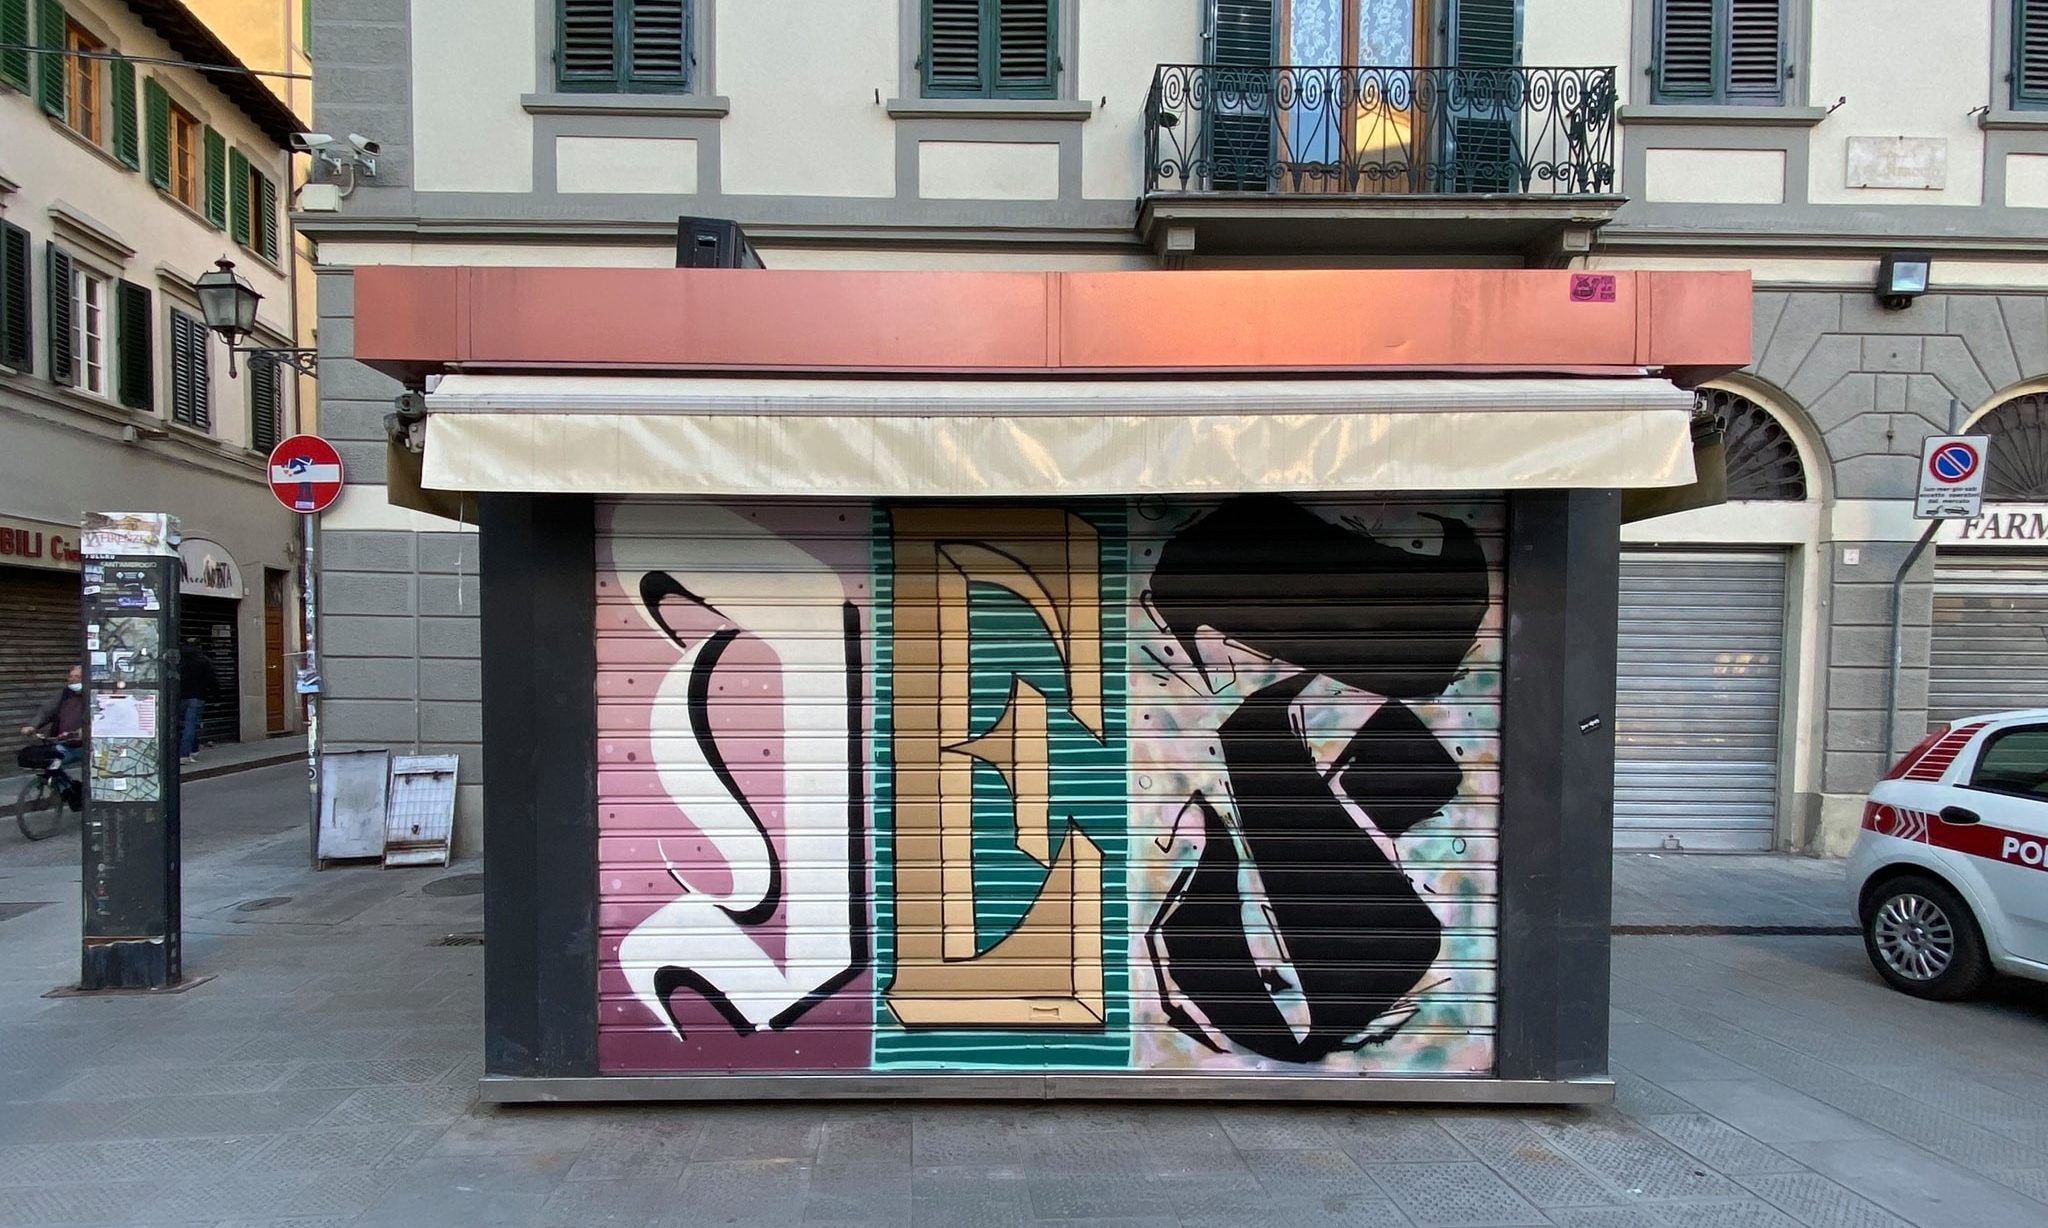 Streetart Edicole Firenze